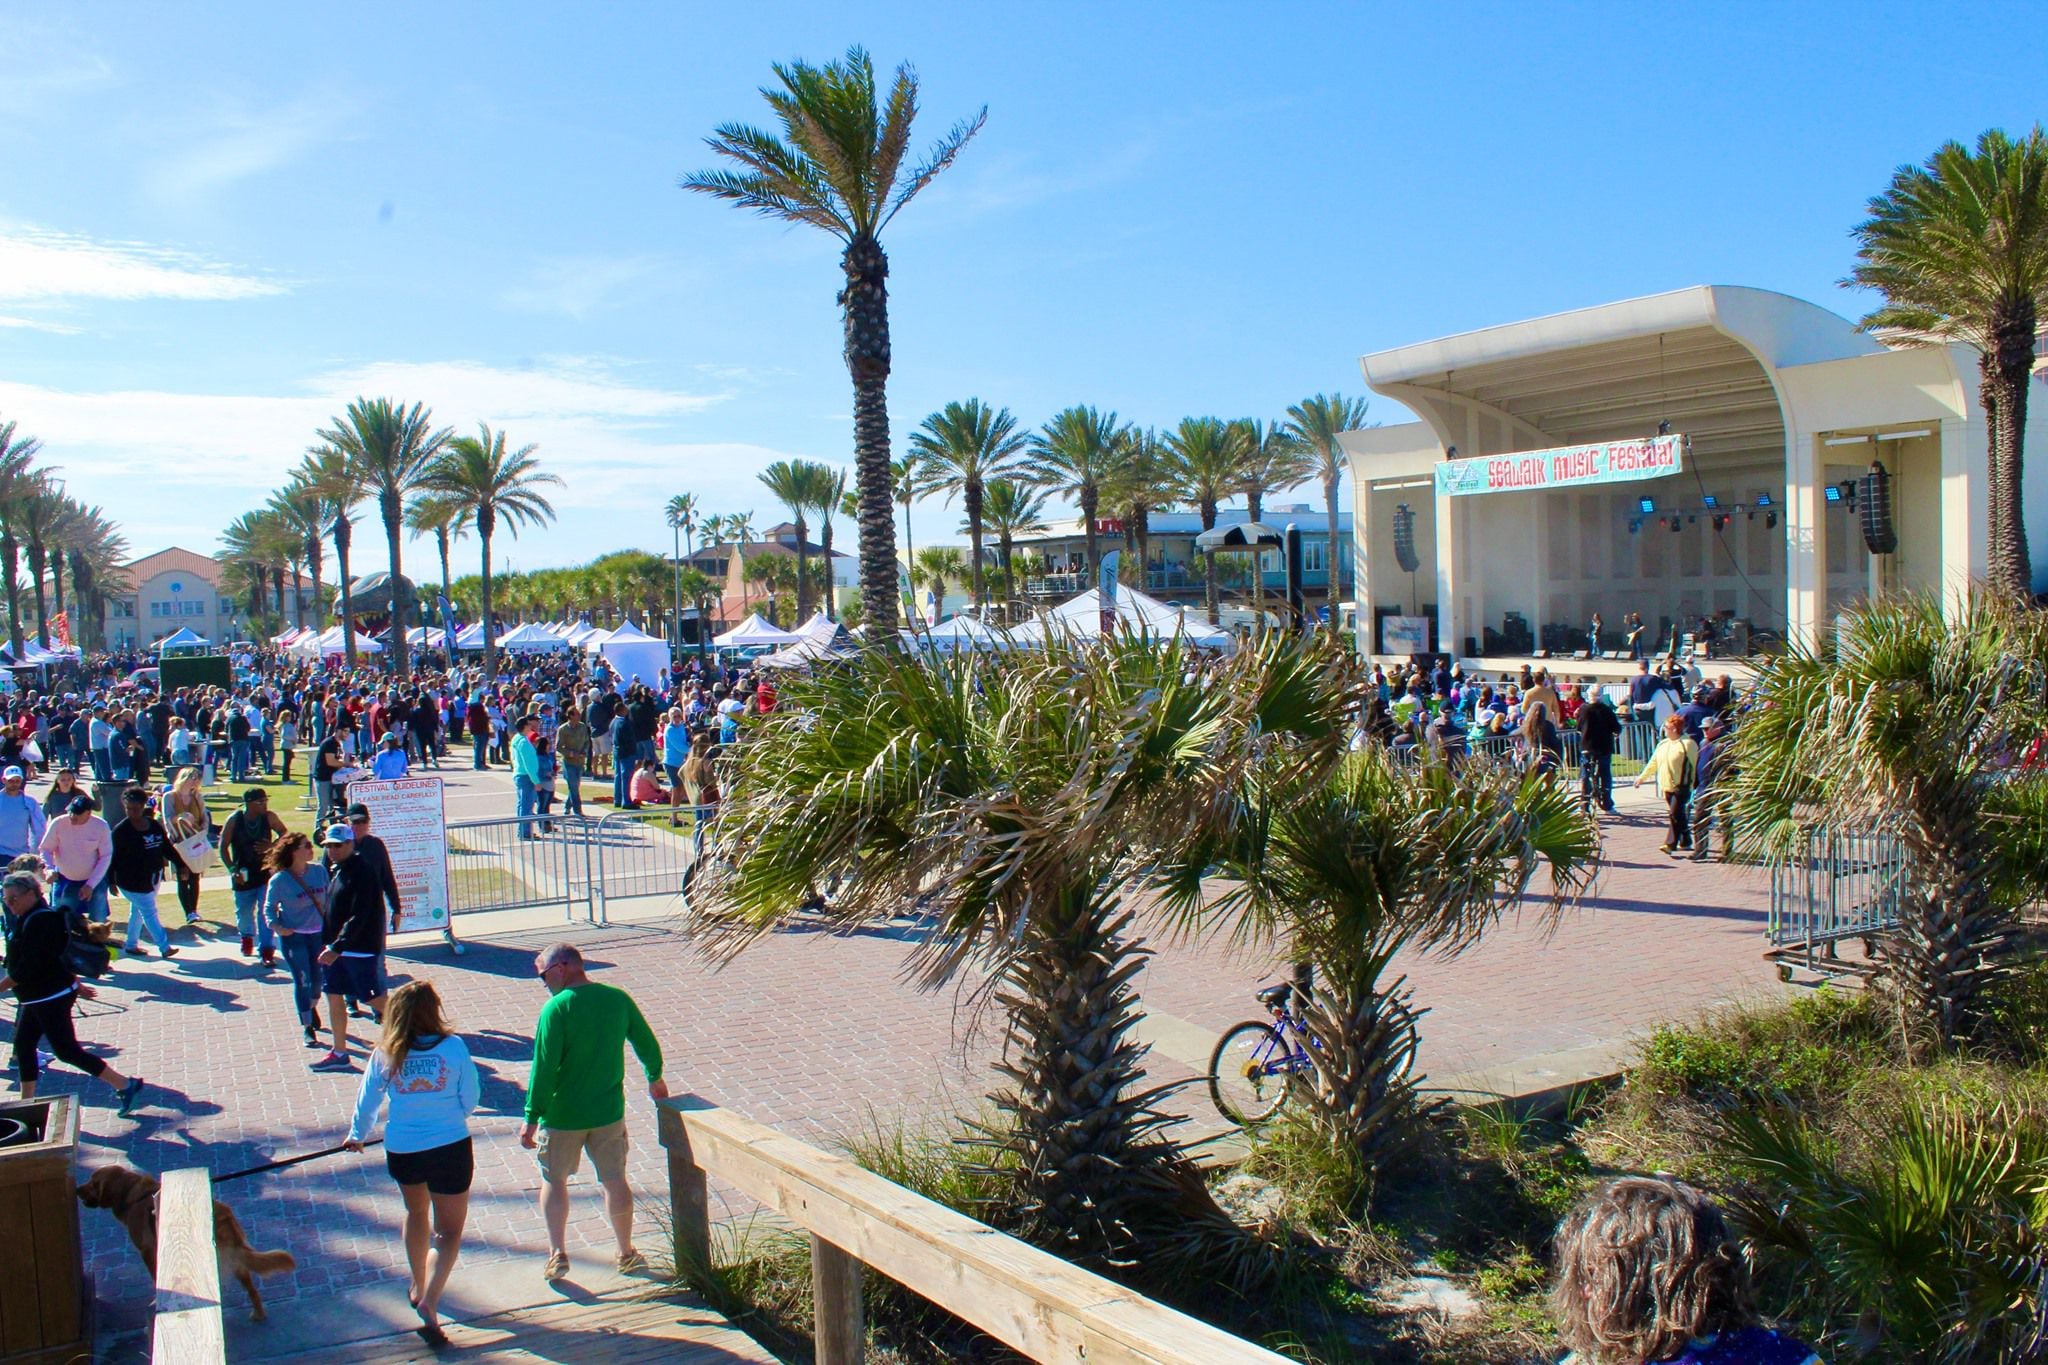 Seawalk Music Festival returns to Jacksonville Beach this weekend